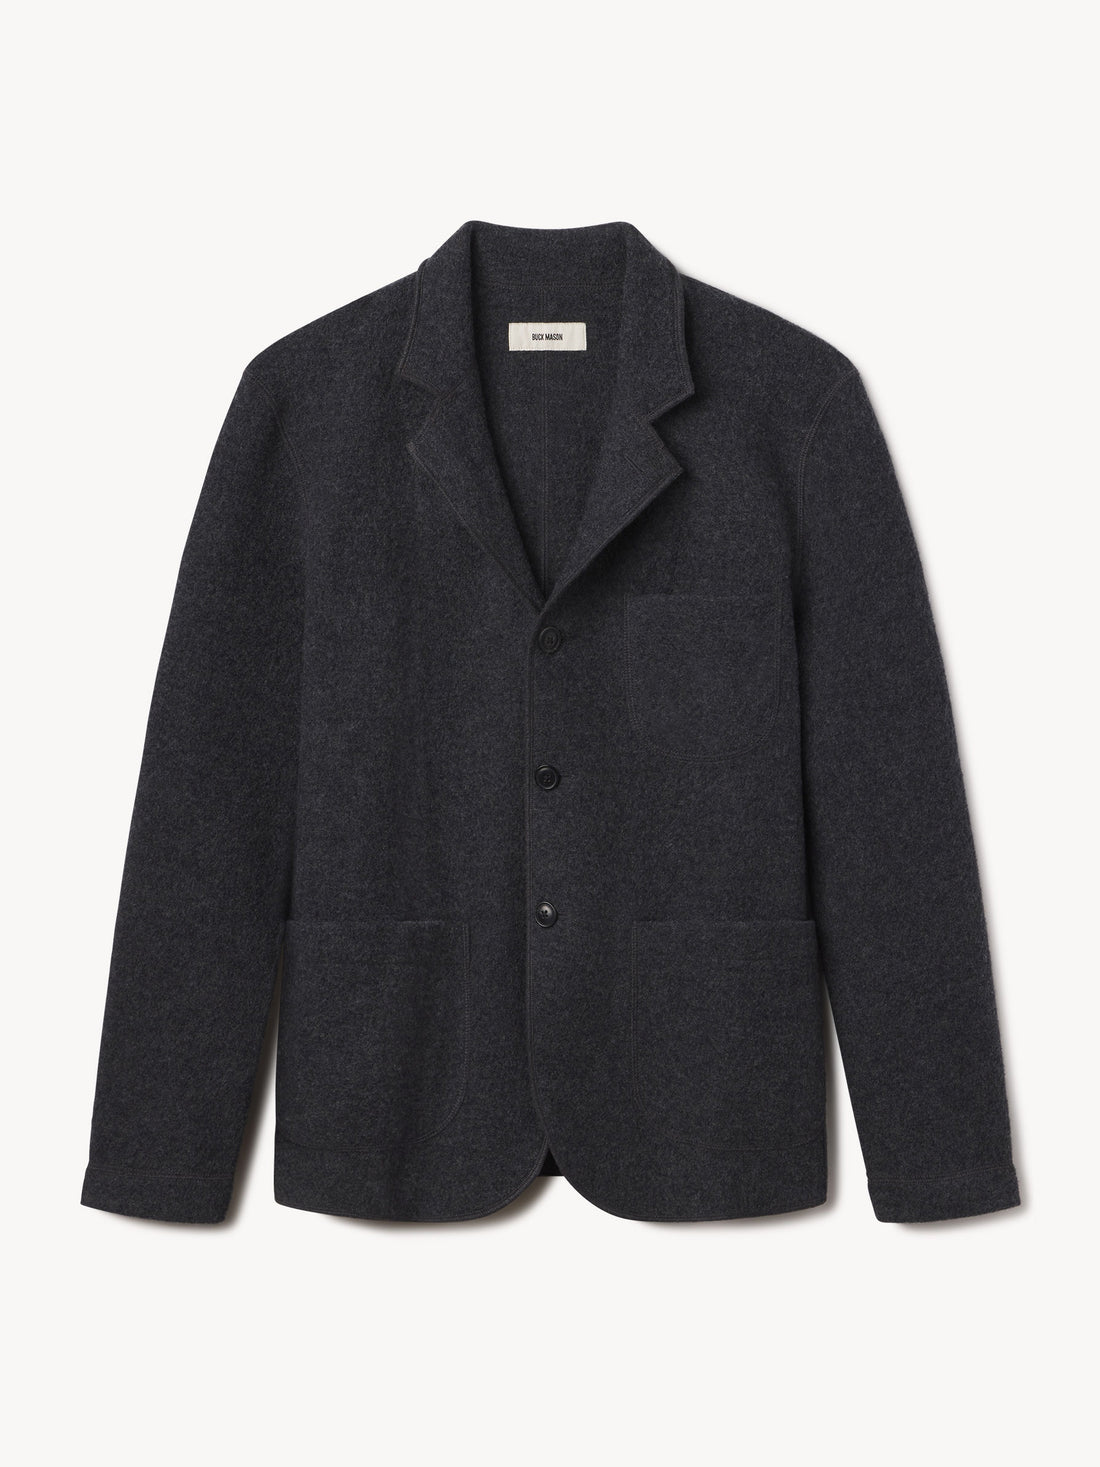 1930s Men’s Coat and Jacket Styles Chore Jacket |  Buck Mason  AT vintagedancer.com